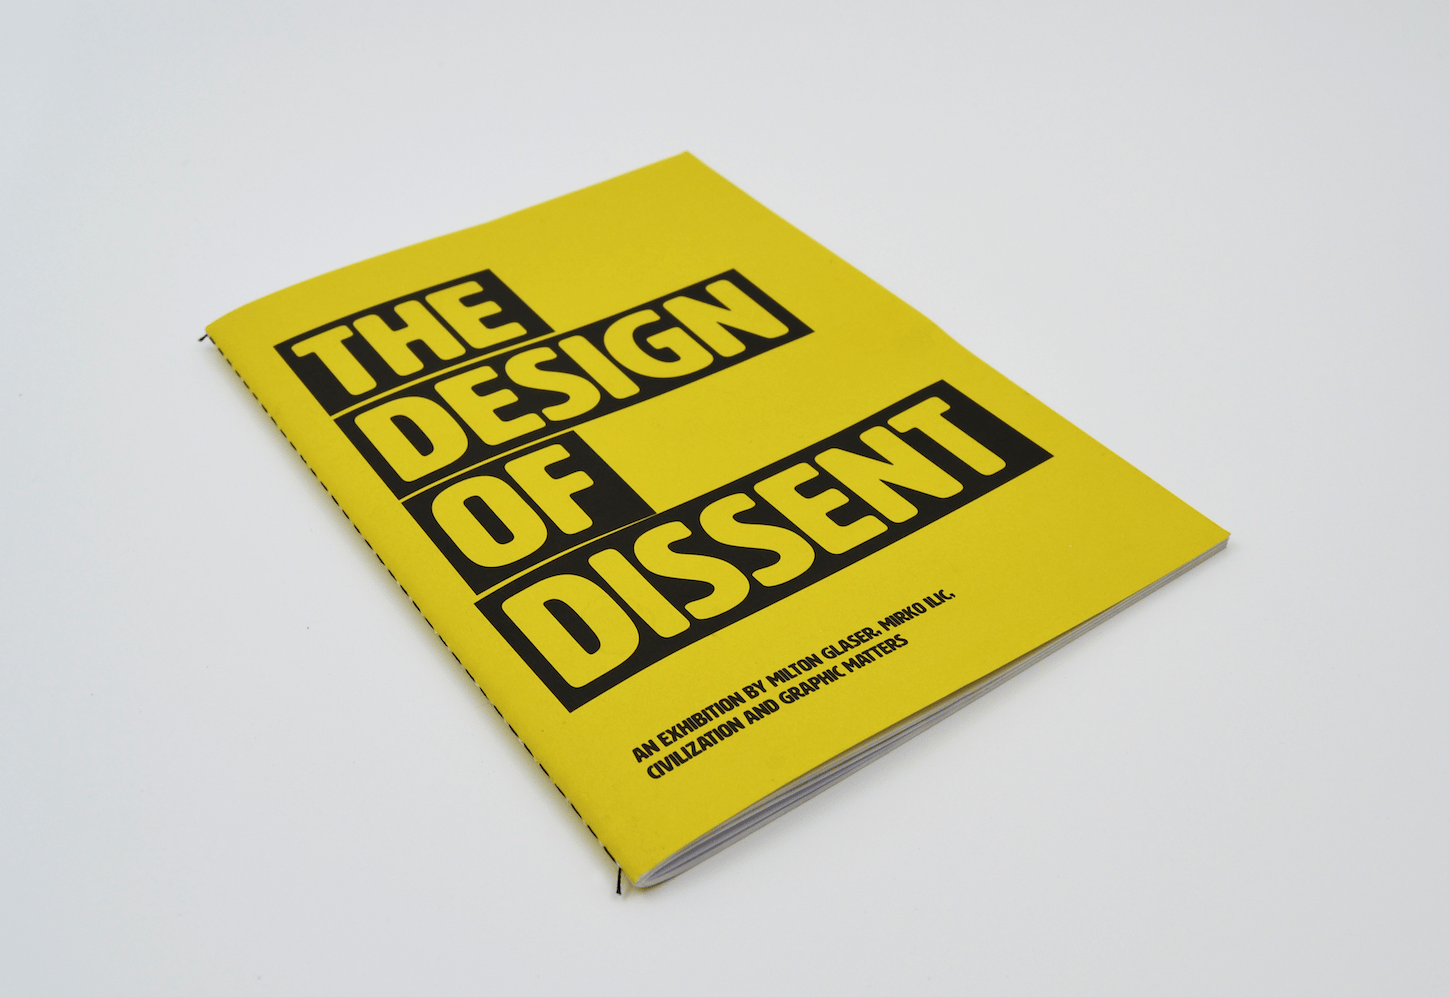 The Design Of Dissent